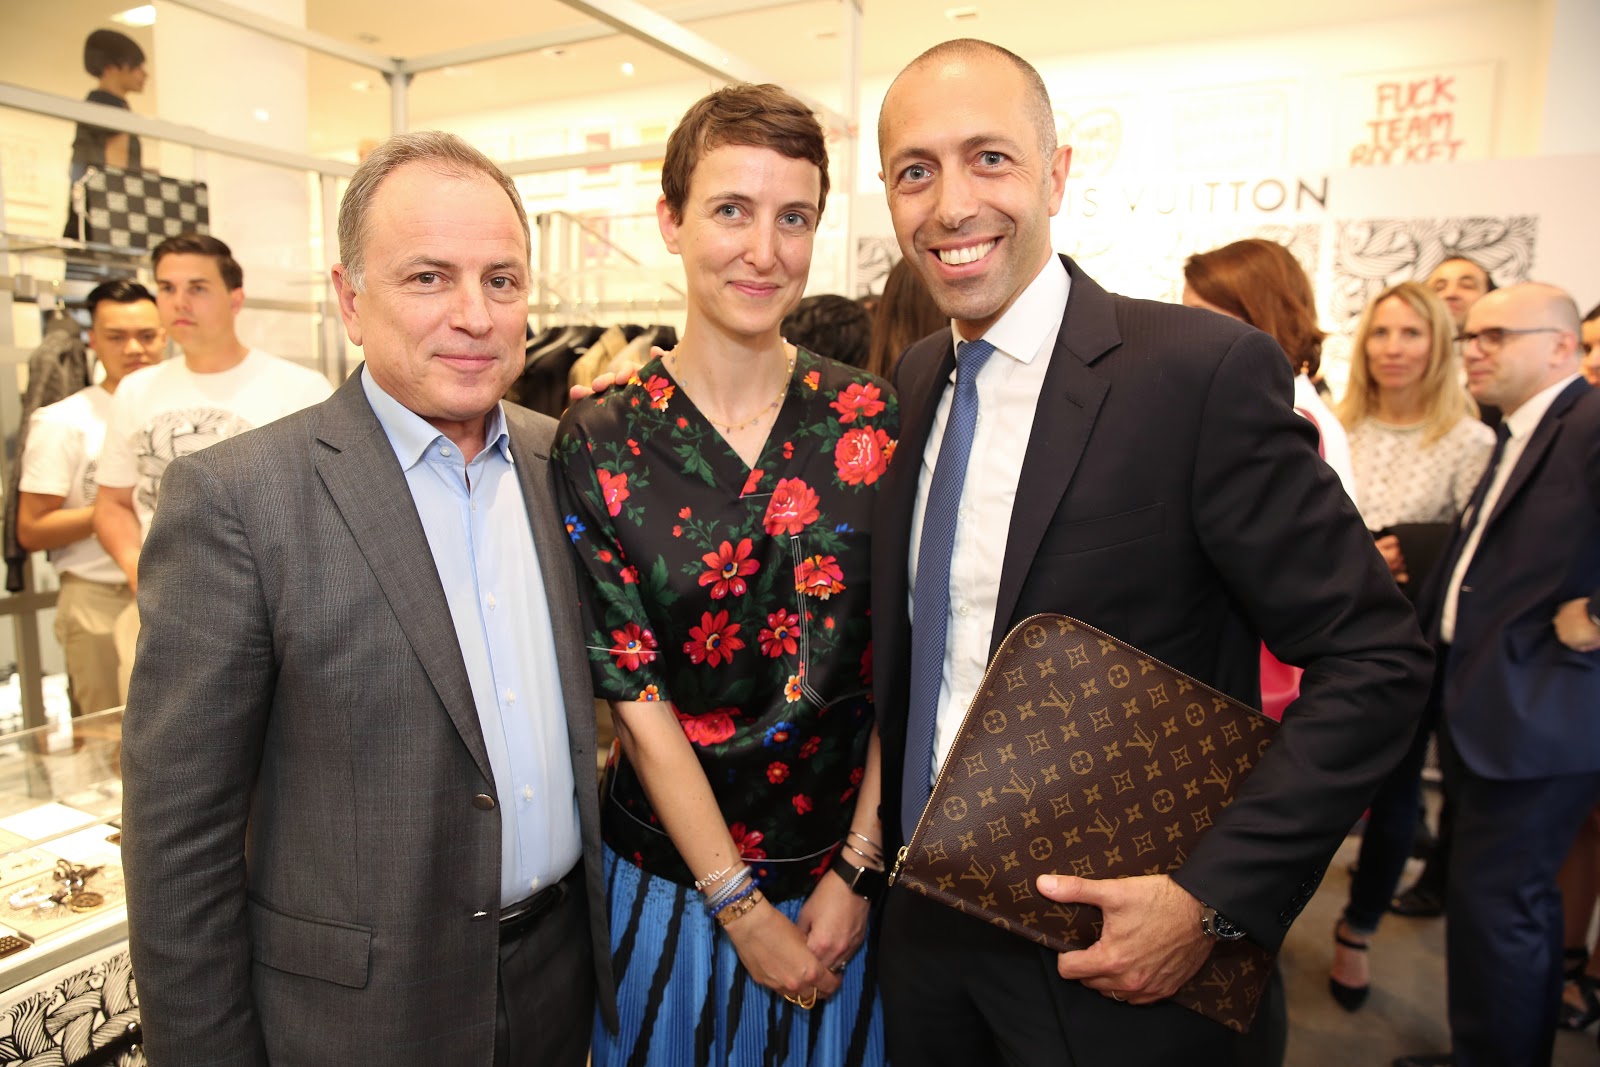 Michael Burke and wife Brigitte attending the Louis Vuitton